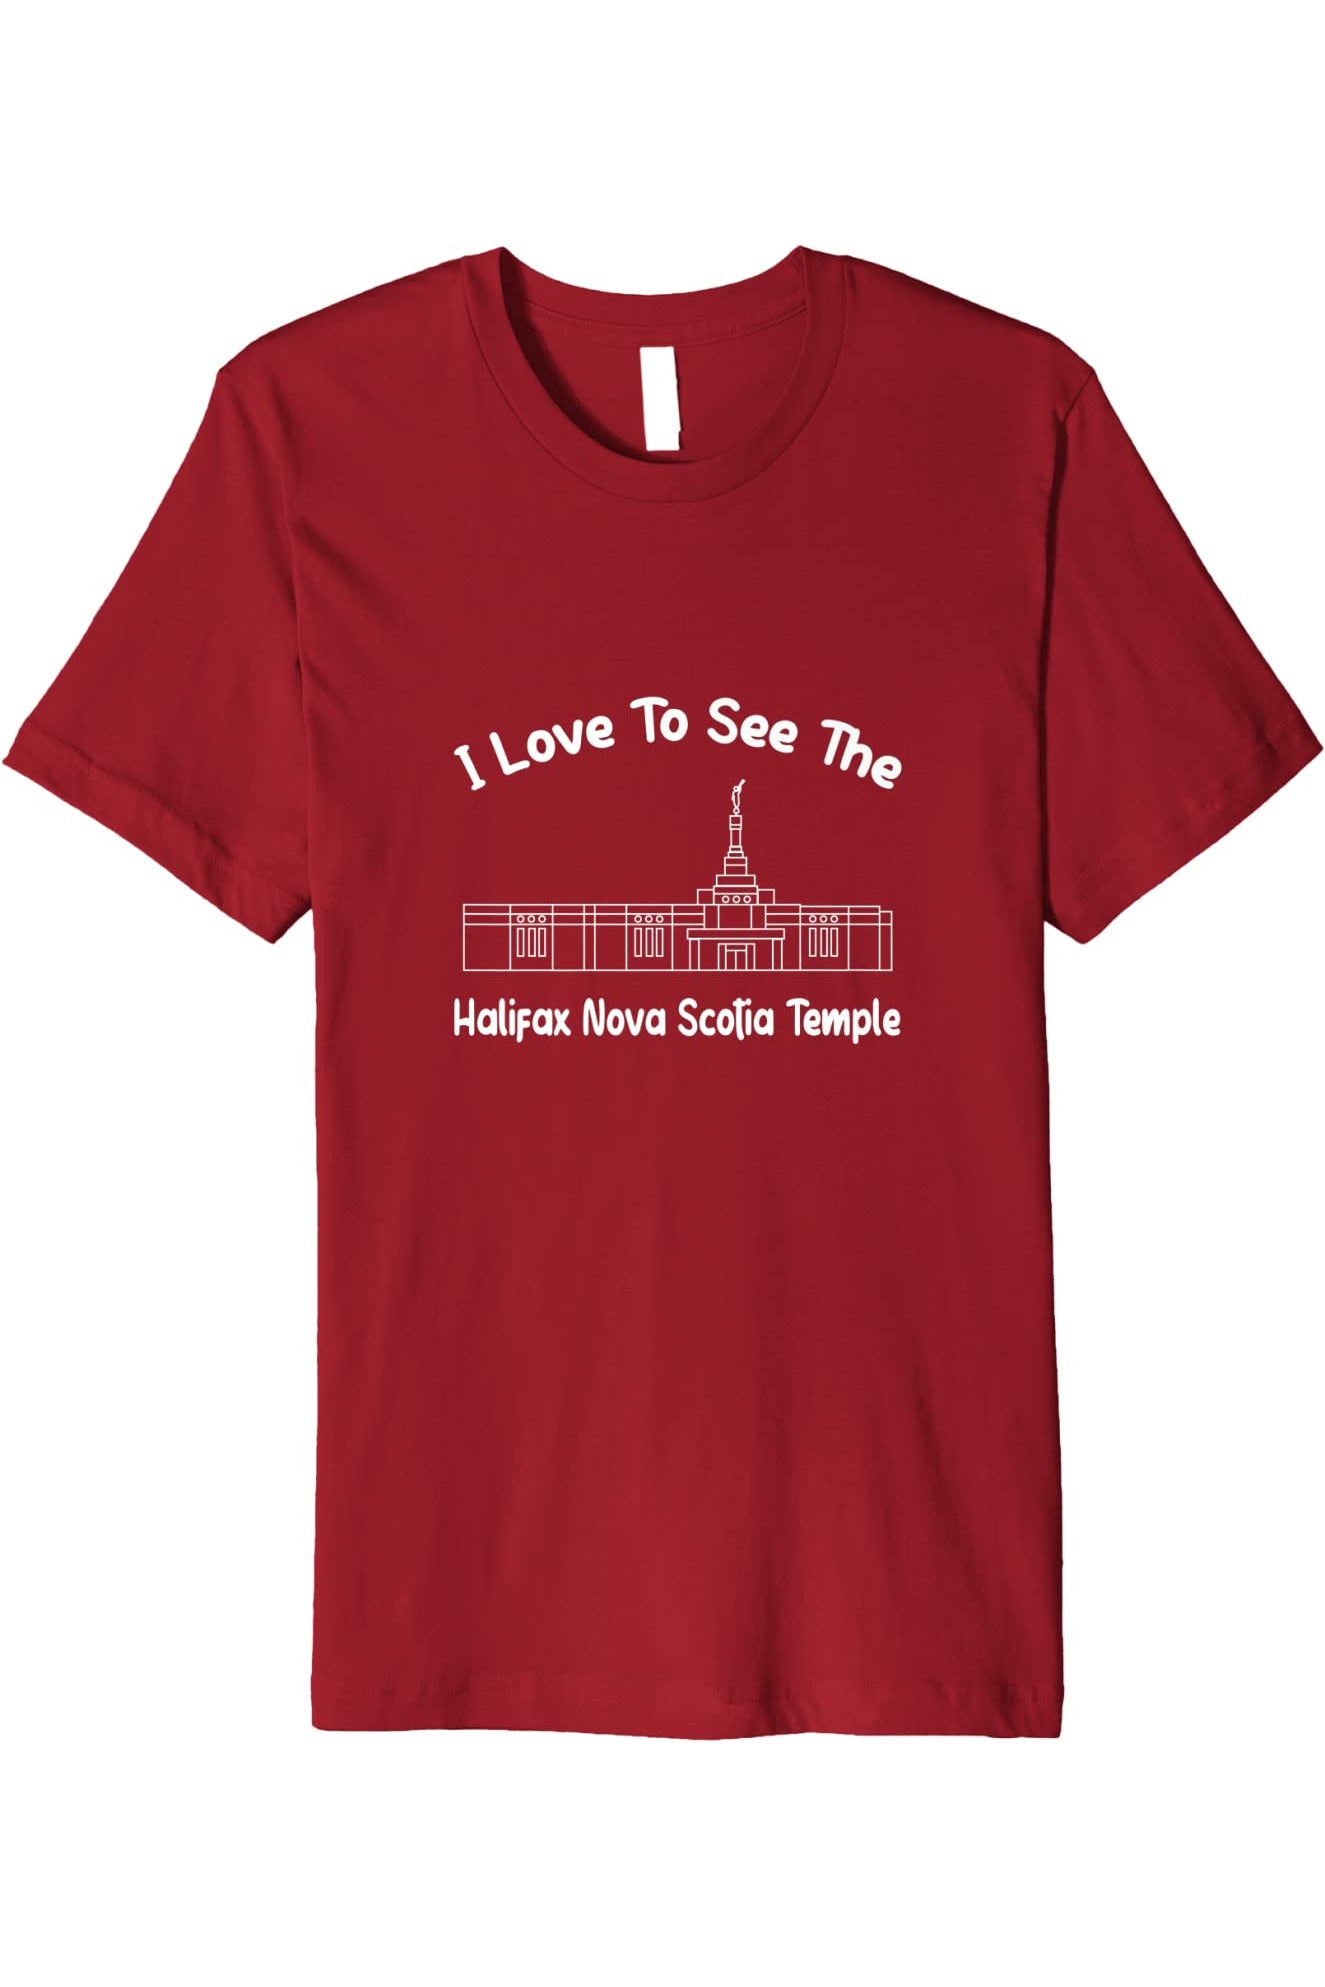 Halifax Nova Scotia Temple T-Shirt - Premium - Primary Style (English) US